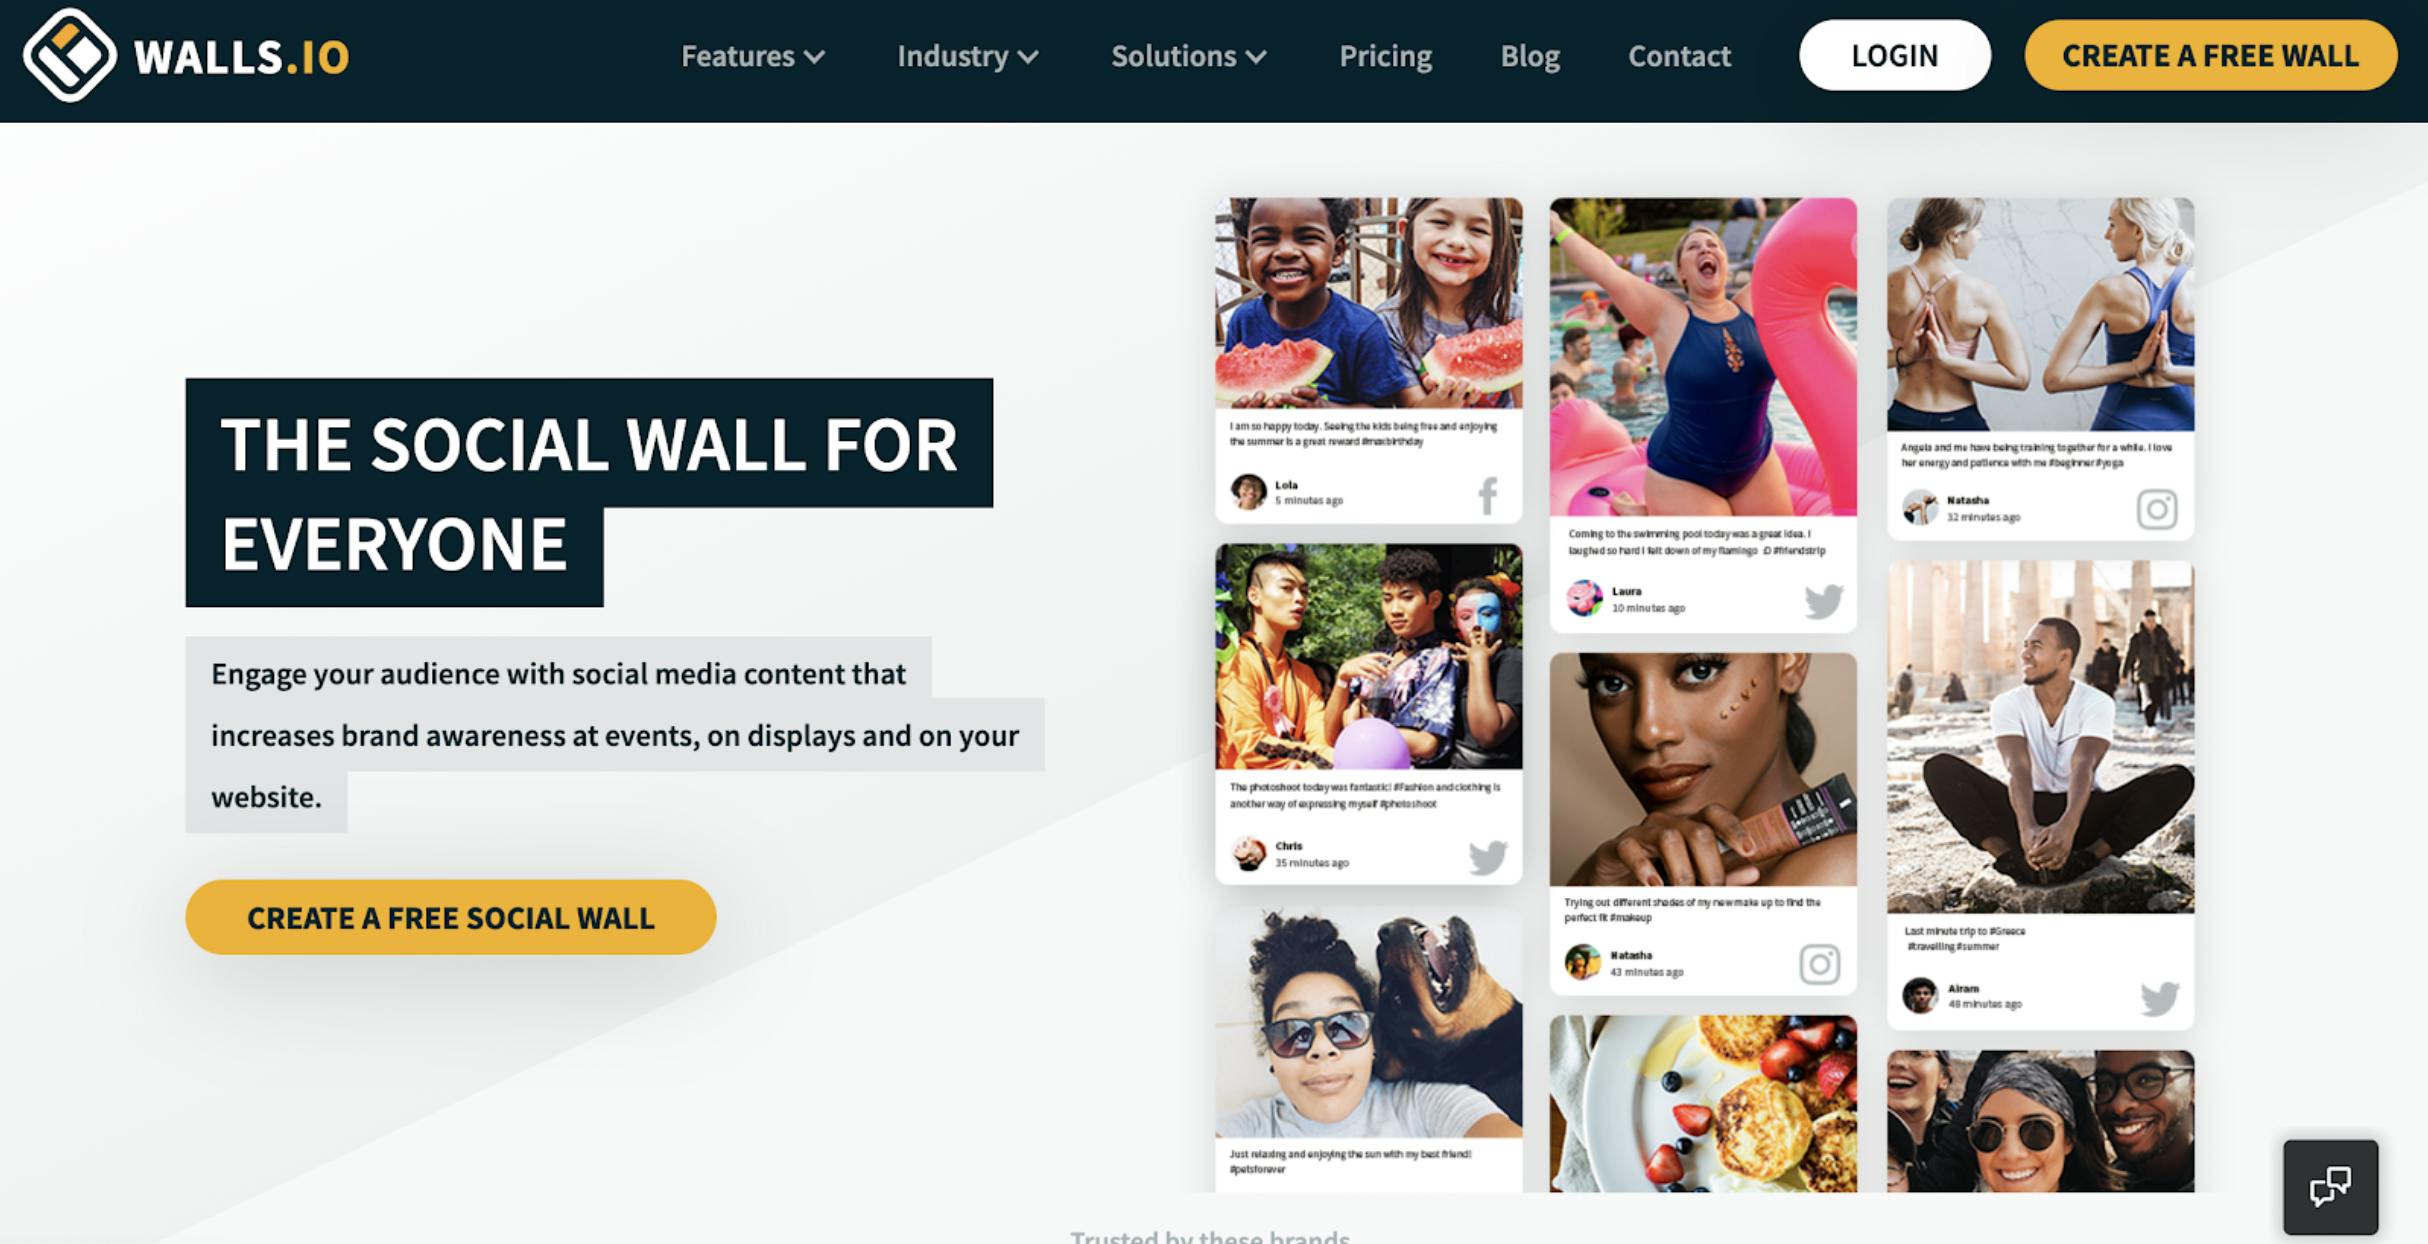 ScreenCloud Walls.io App Guide - Walls.io Site 1.21.2021.png
